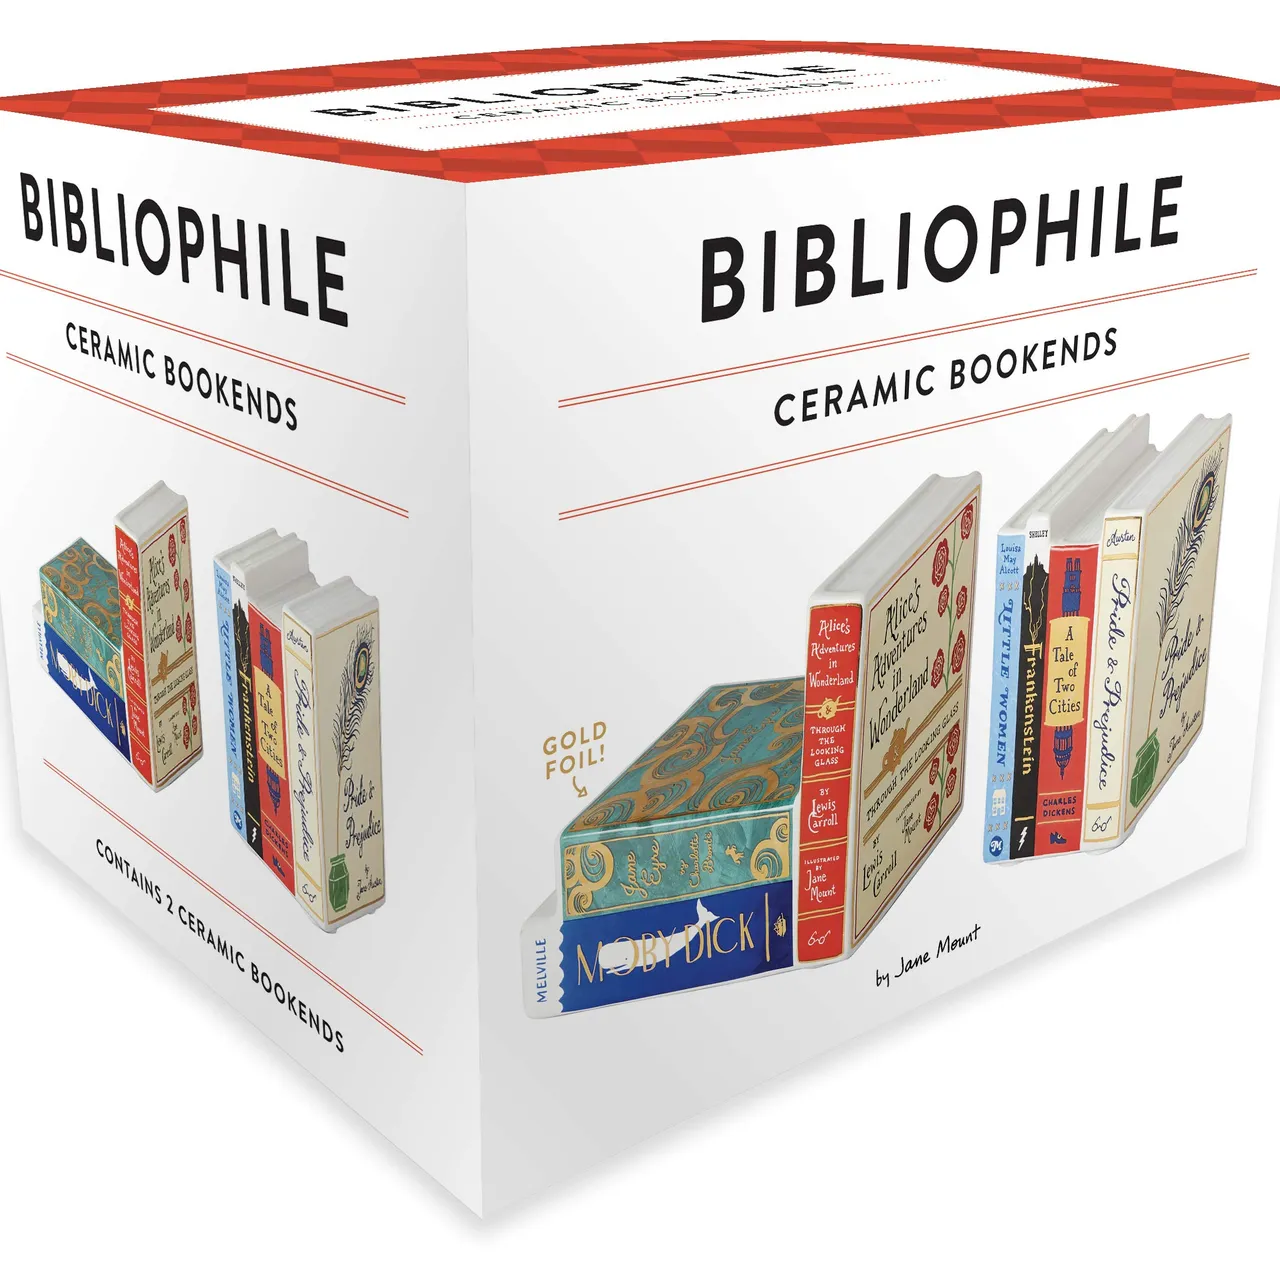 Bibliophile ceramic bookends (new) photo 3